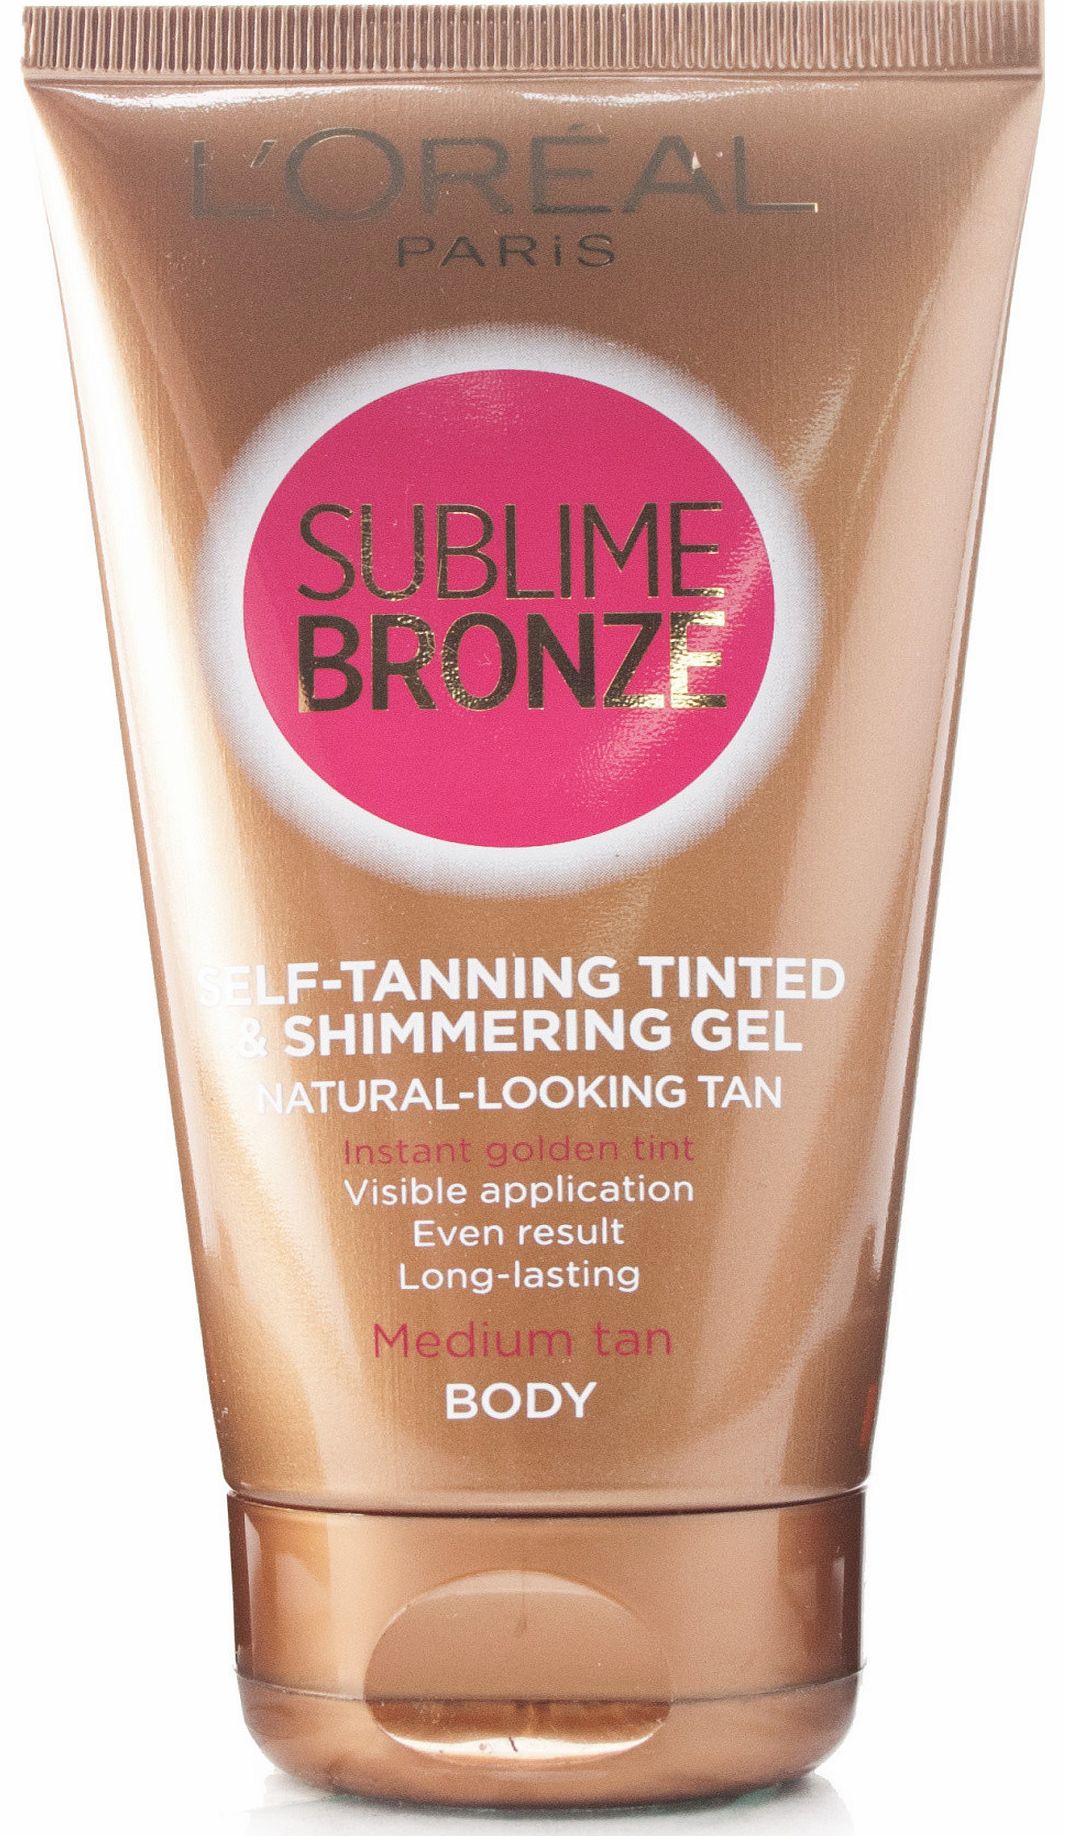 L'oreal Sublime Bronze Self-Tanning Gel